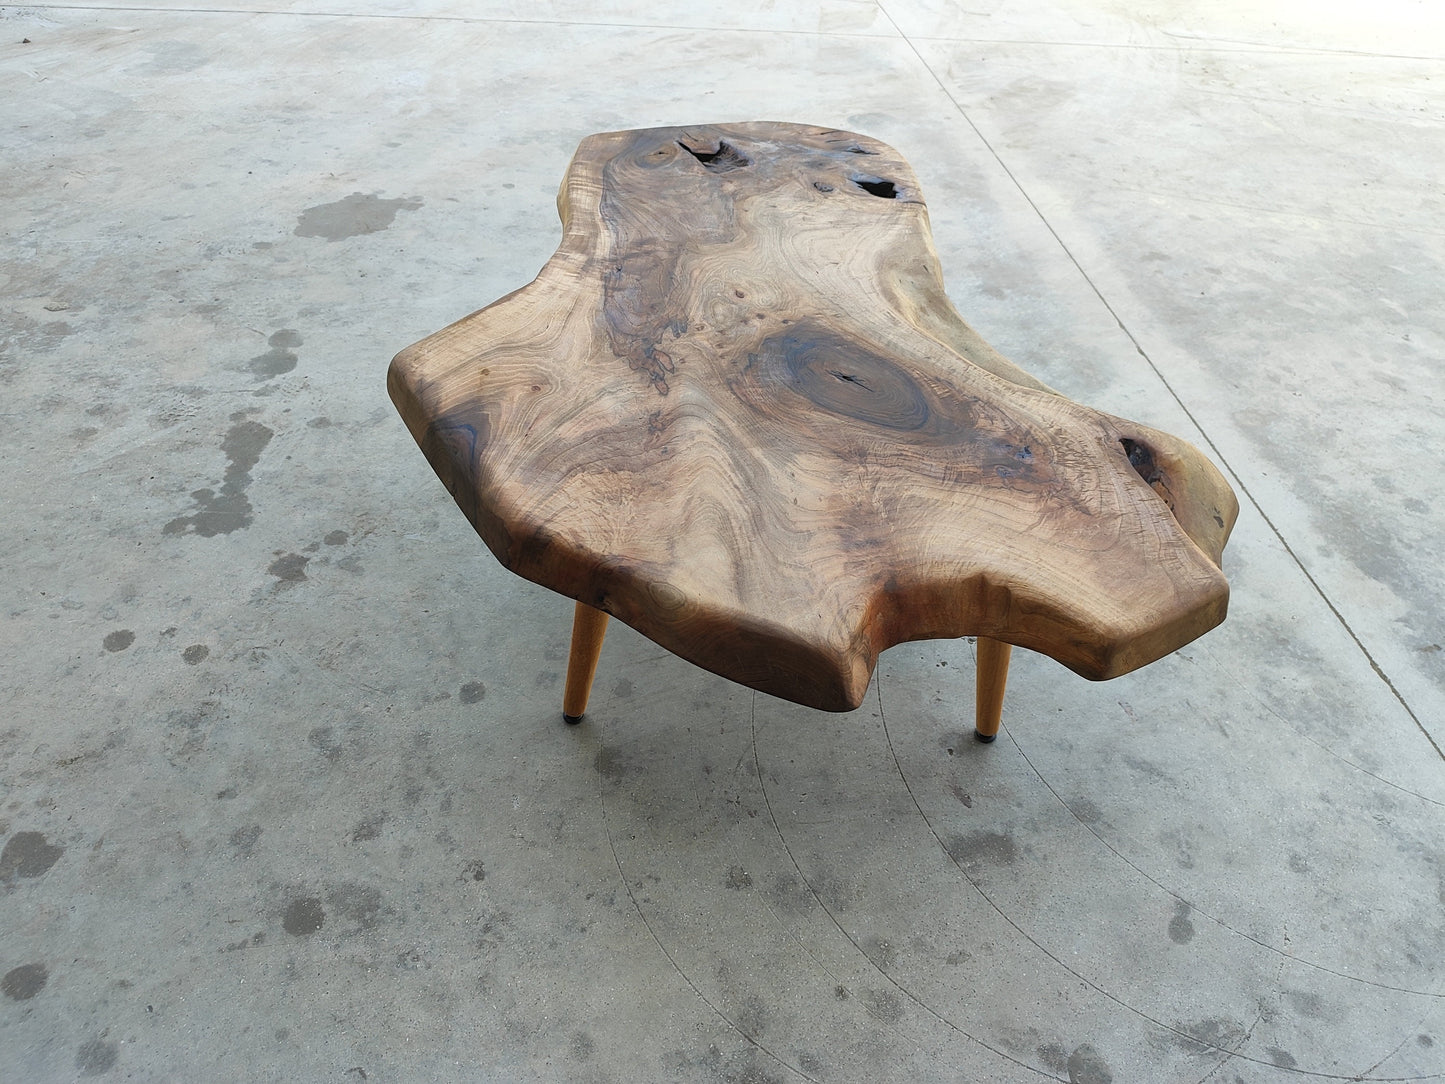 Rustic Handmade Wood Coffee Table - Unique Walnut (WG-1070)